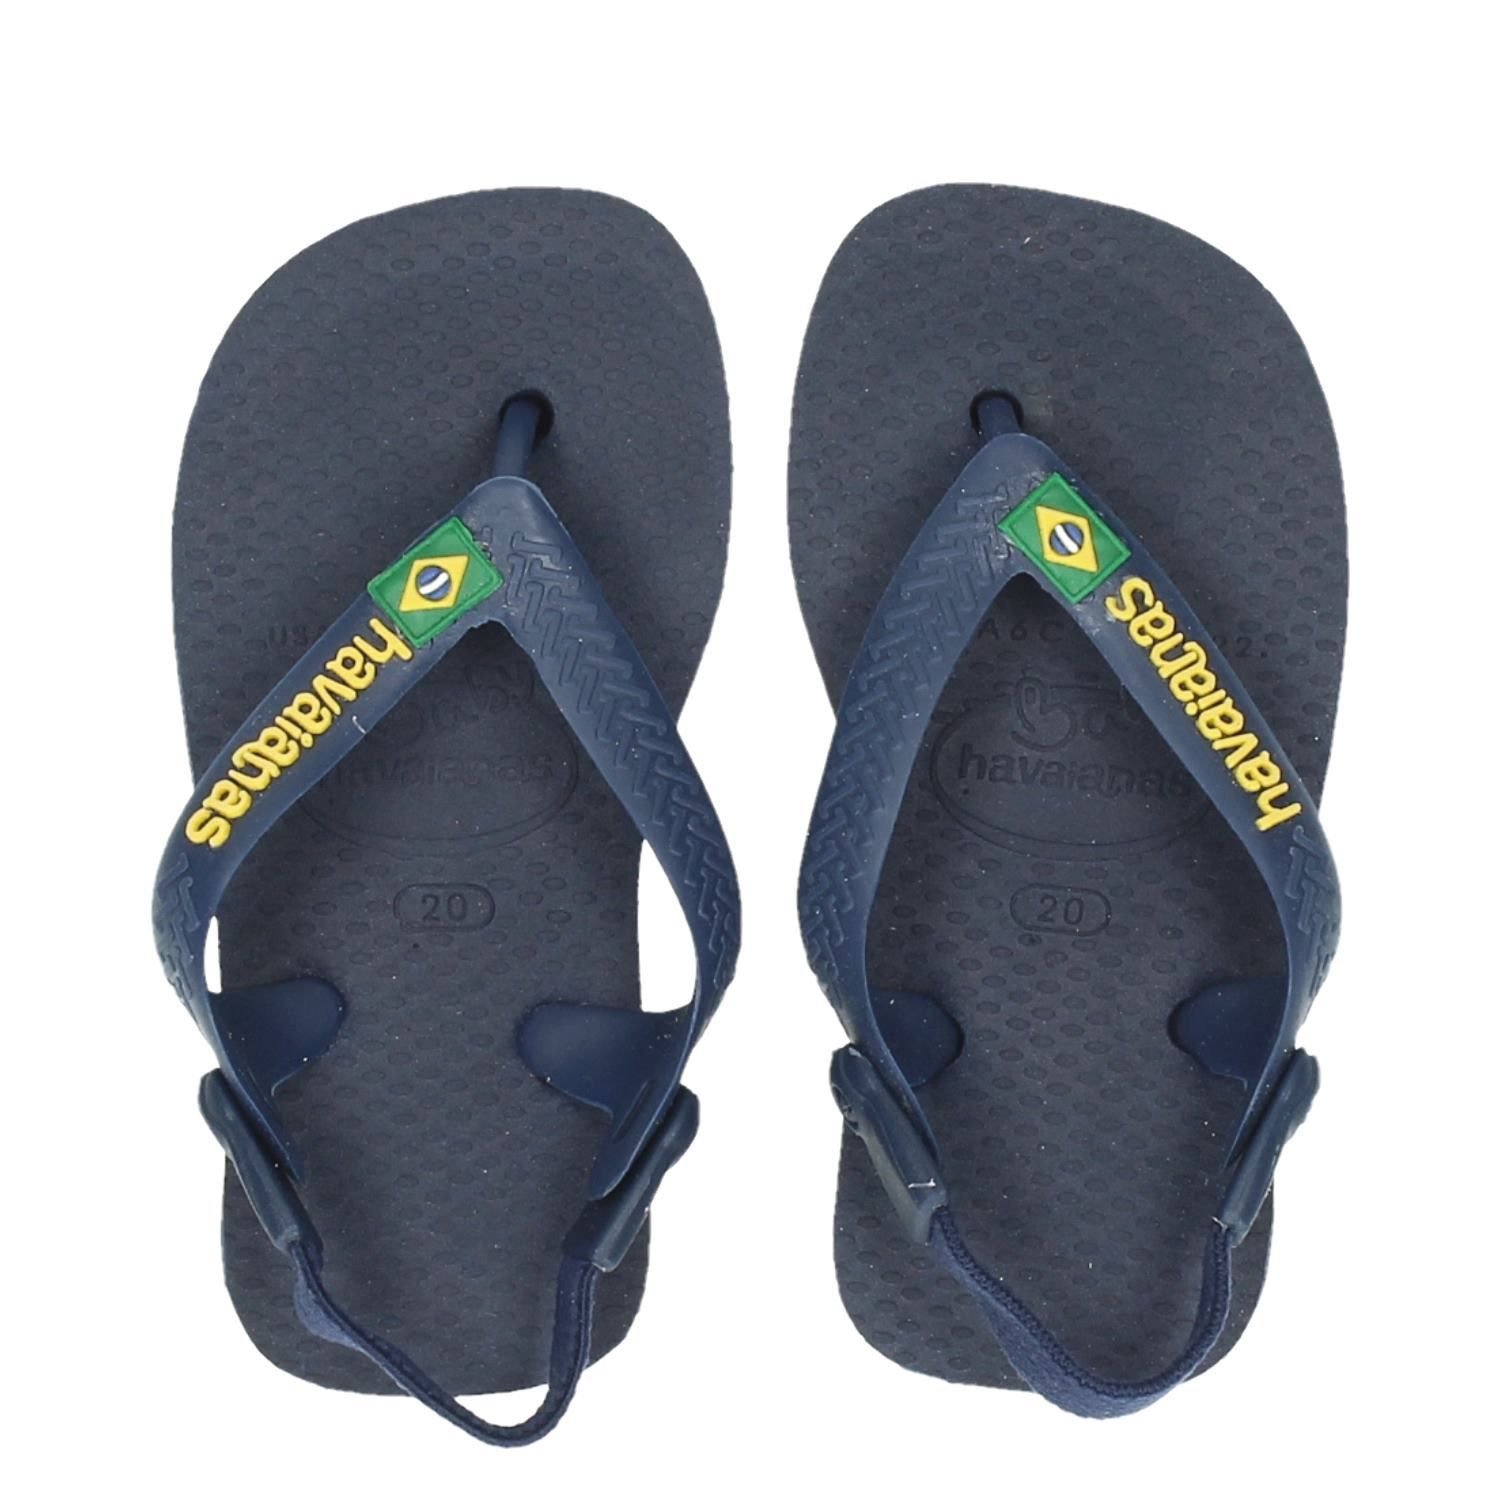 Golf Kalksteen besteden Havaianas slippers donkerblauw Jongens ( - baby brasil logo4140577) -  Junior Steps